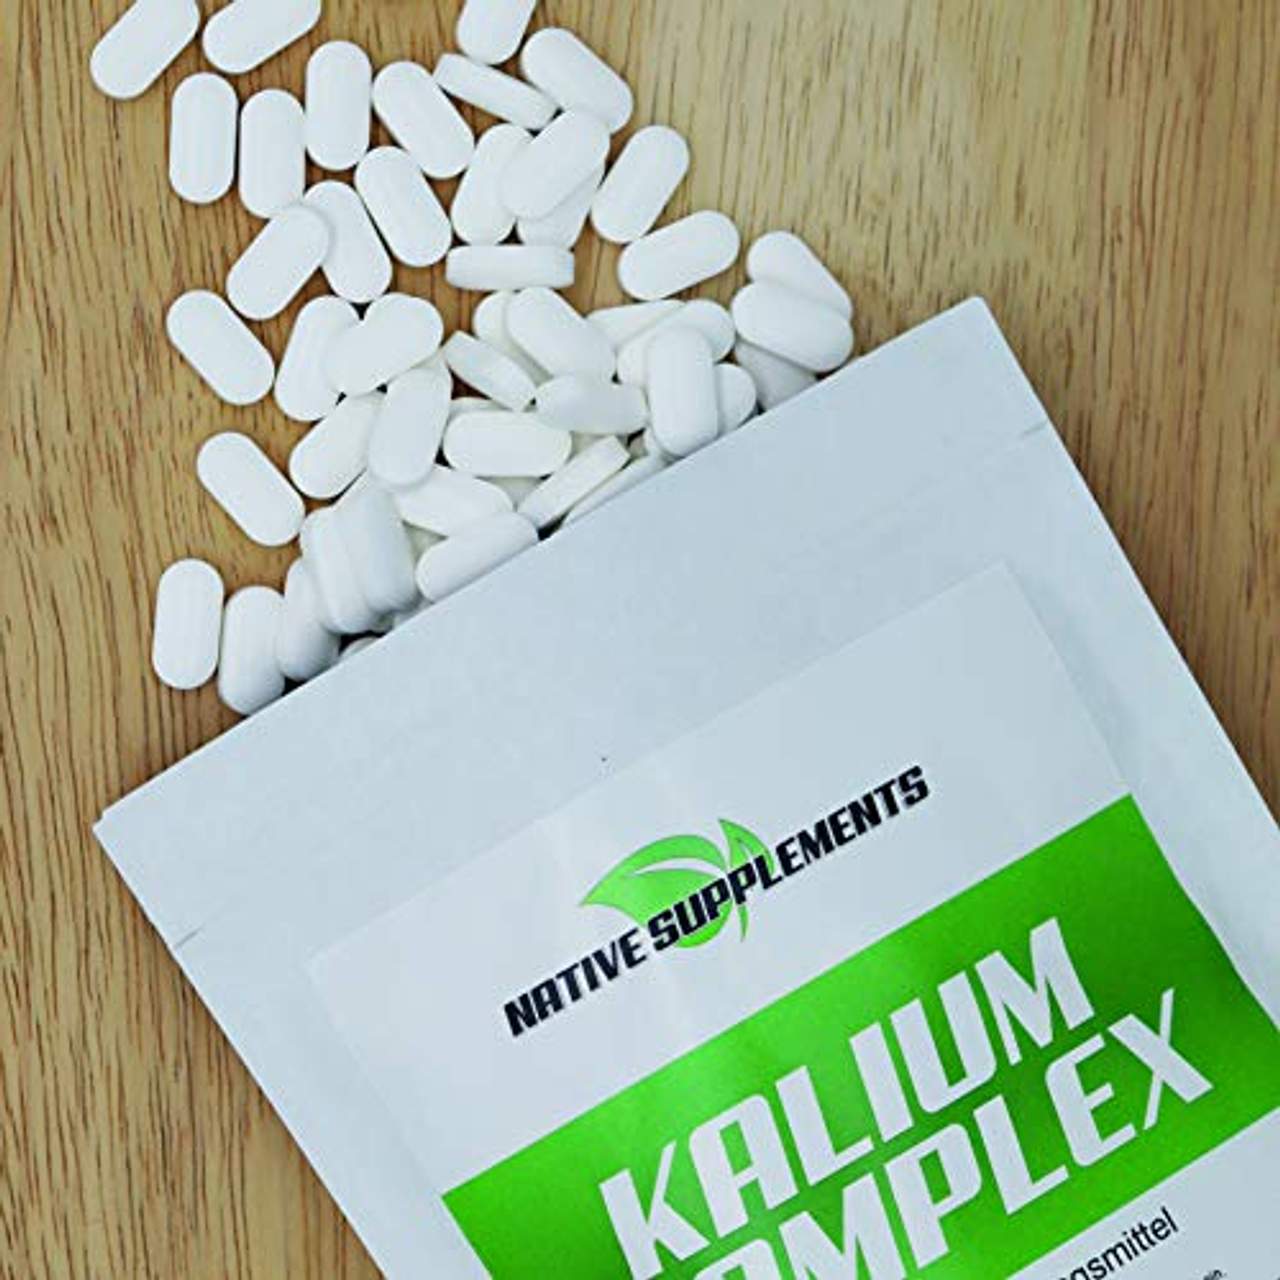 Native Supplements Kalium Komplex